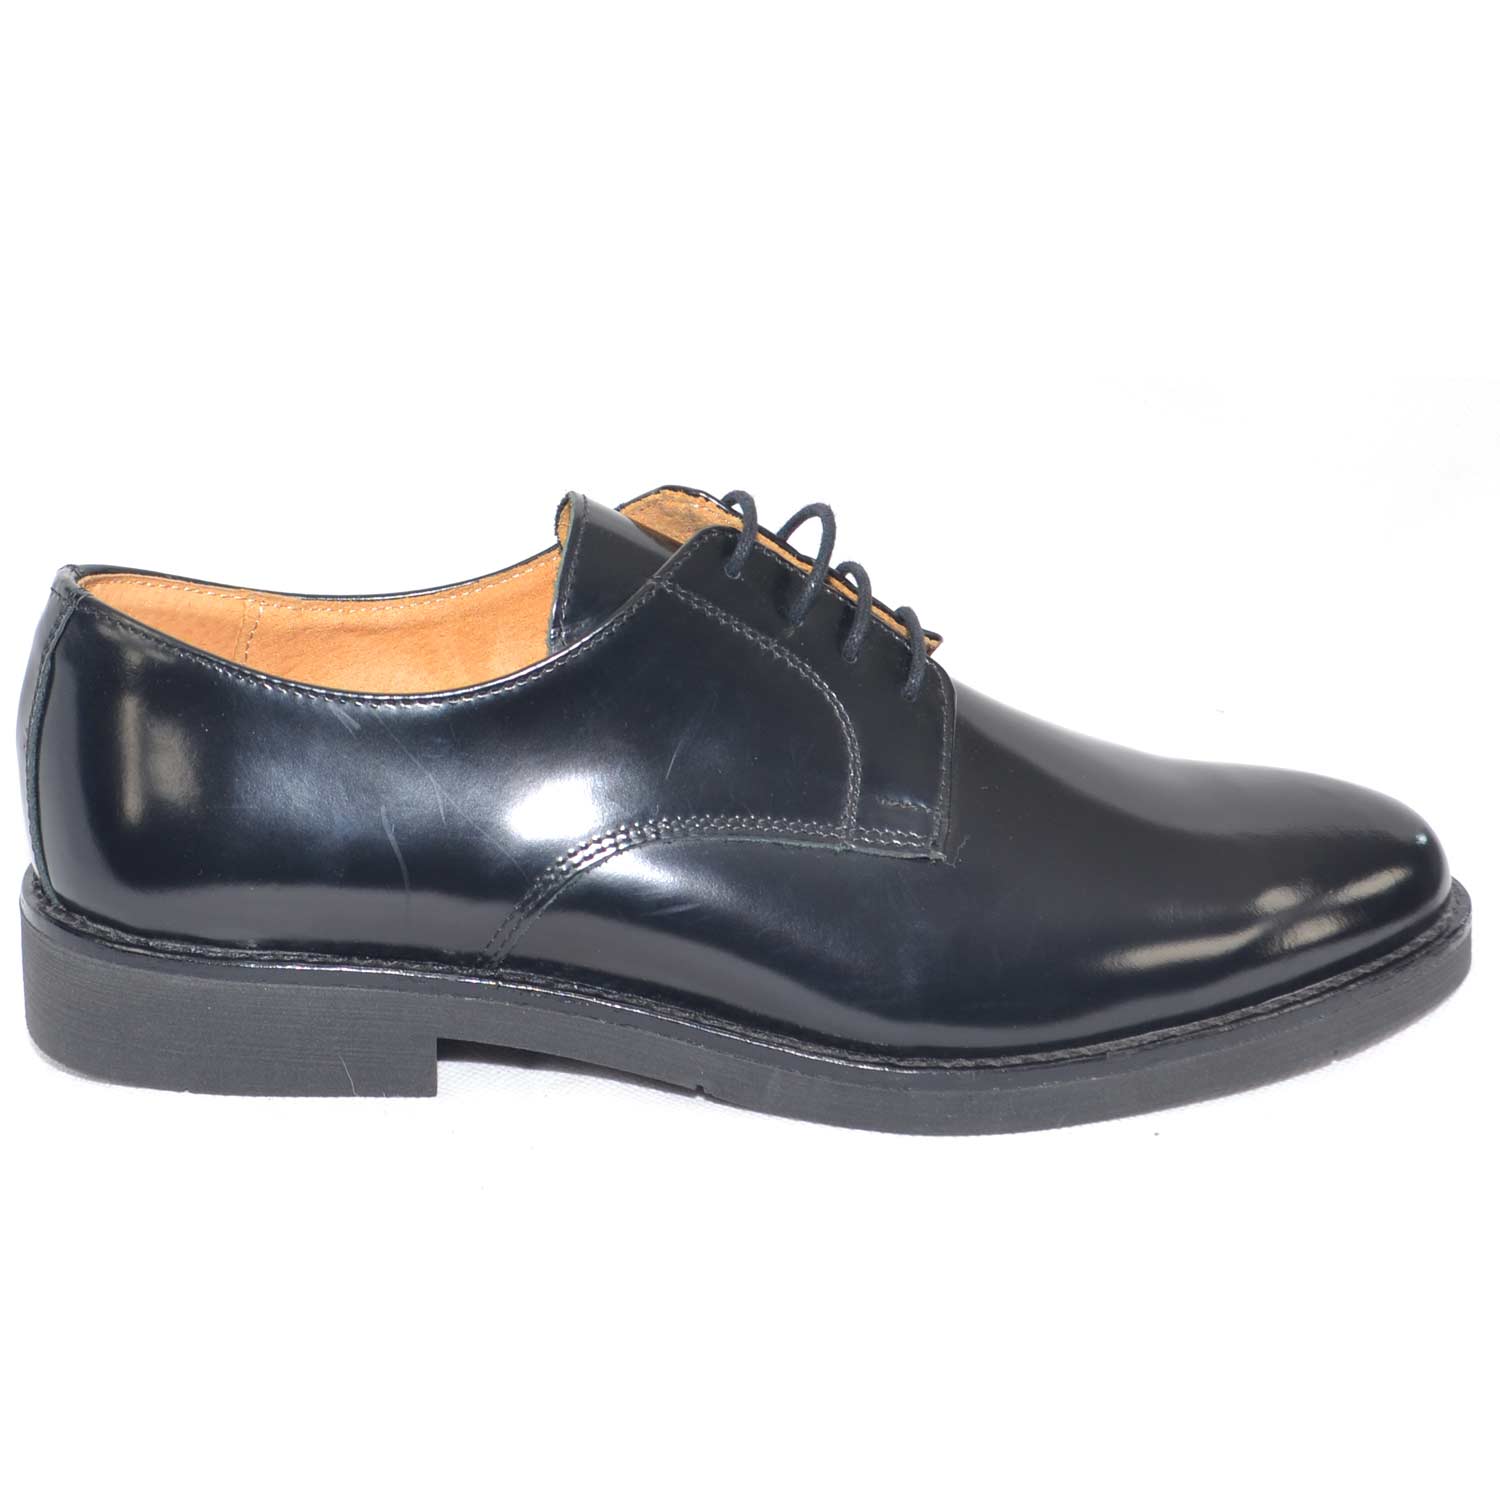 scarpe uomo stringate vera pelle abrasivato nero made in italy fondo antiscivolo artigianale cerimonia elegante art 014.